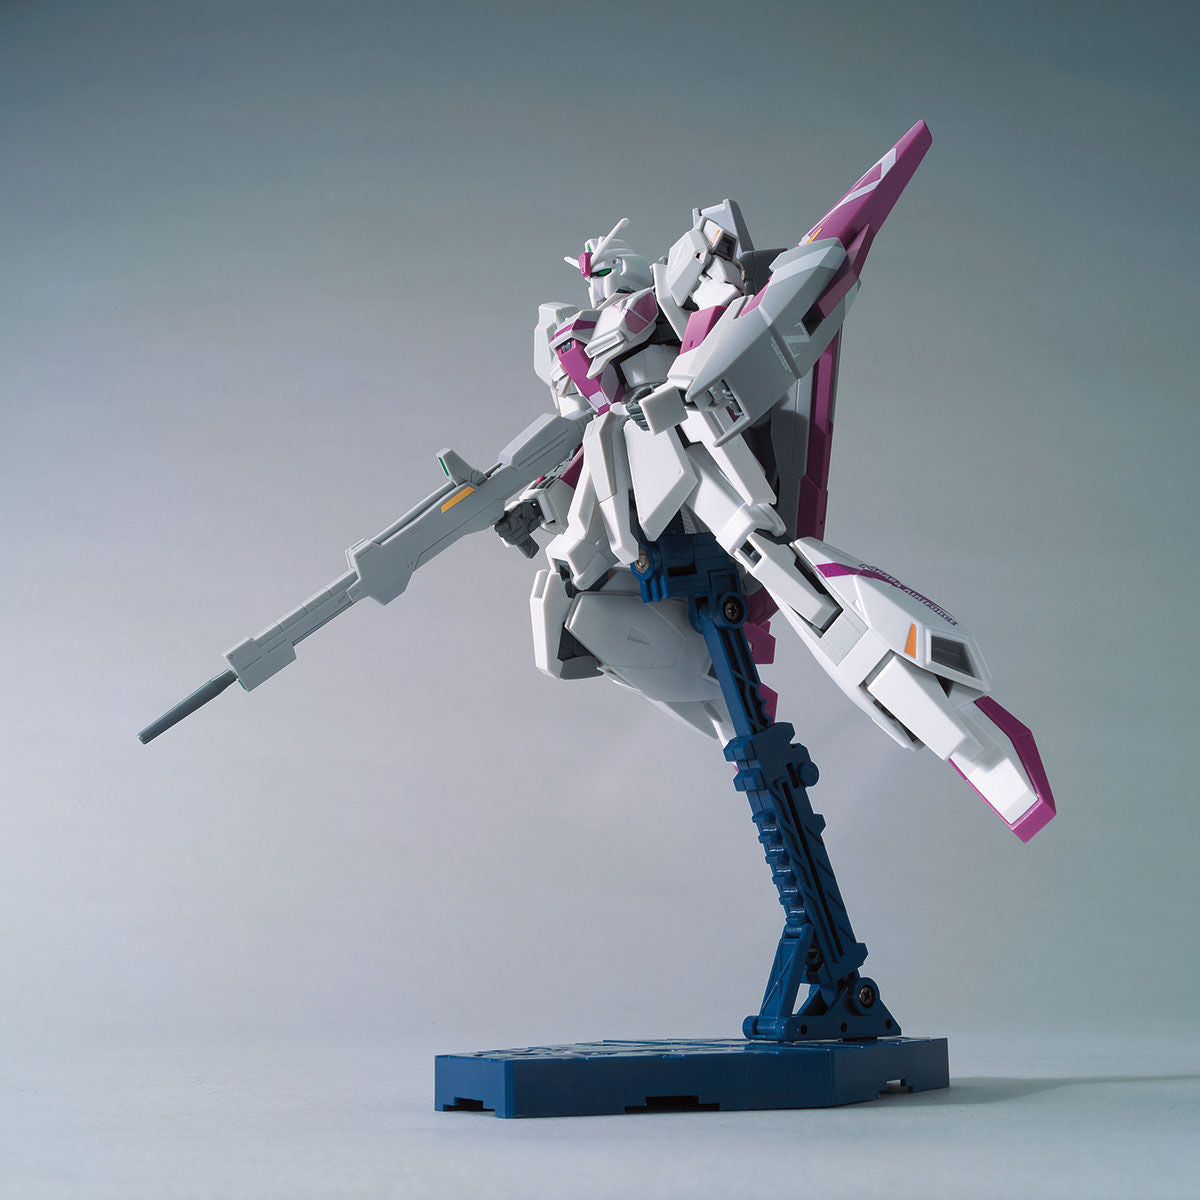 HG 1/144 Gundam Base Limited Zeta Gundam III